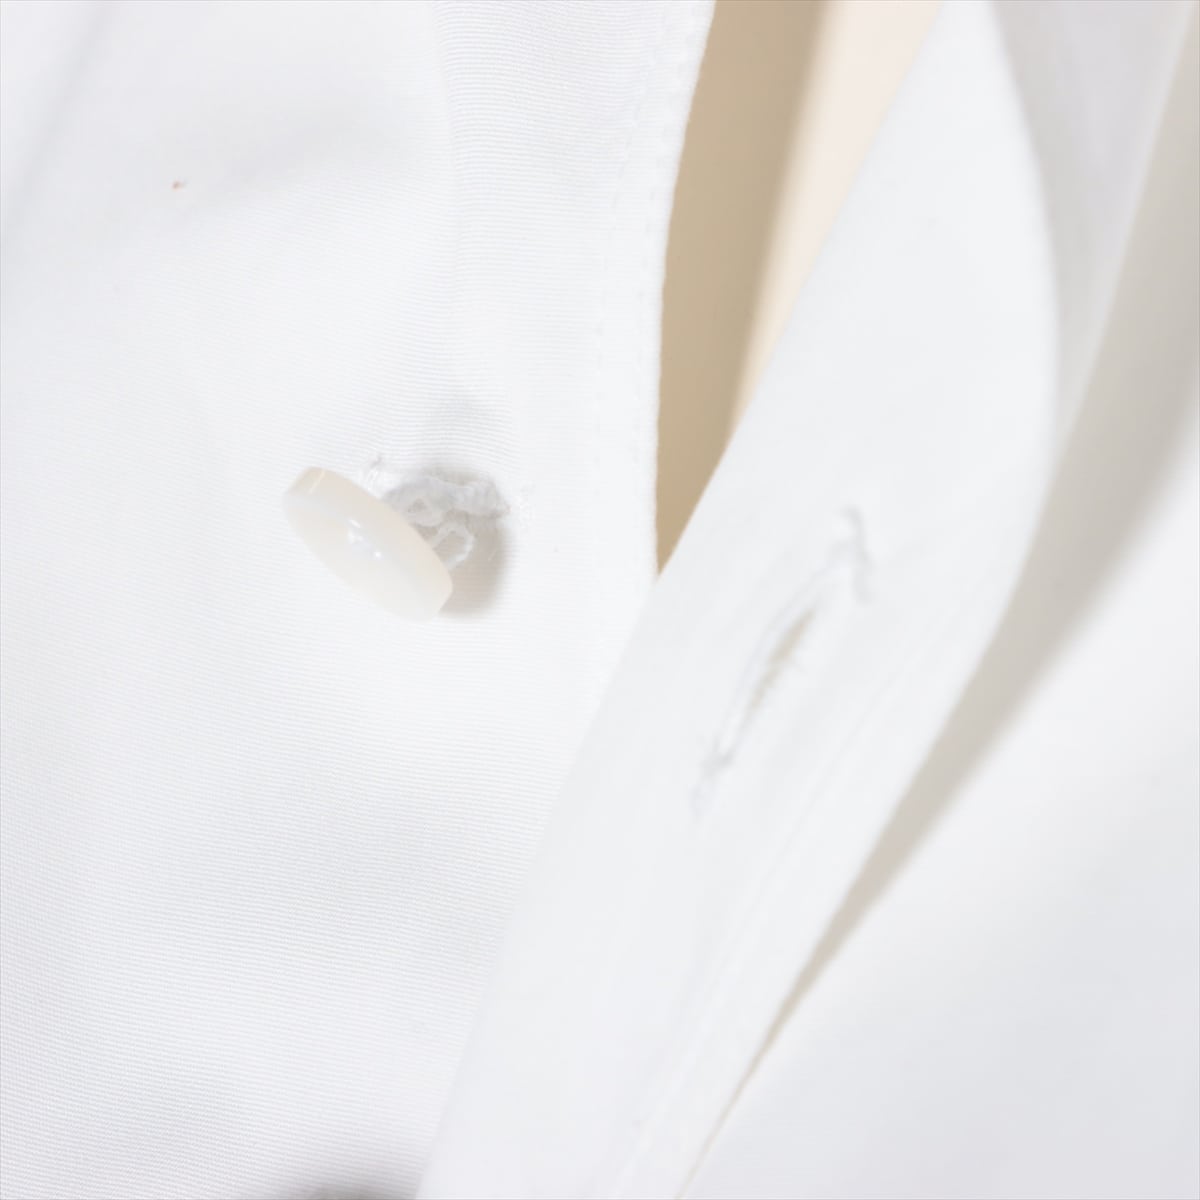 Maison Margiela Cotton Shirt dress Ladies' White